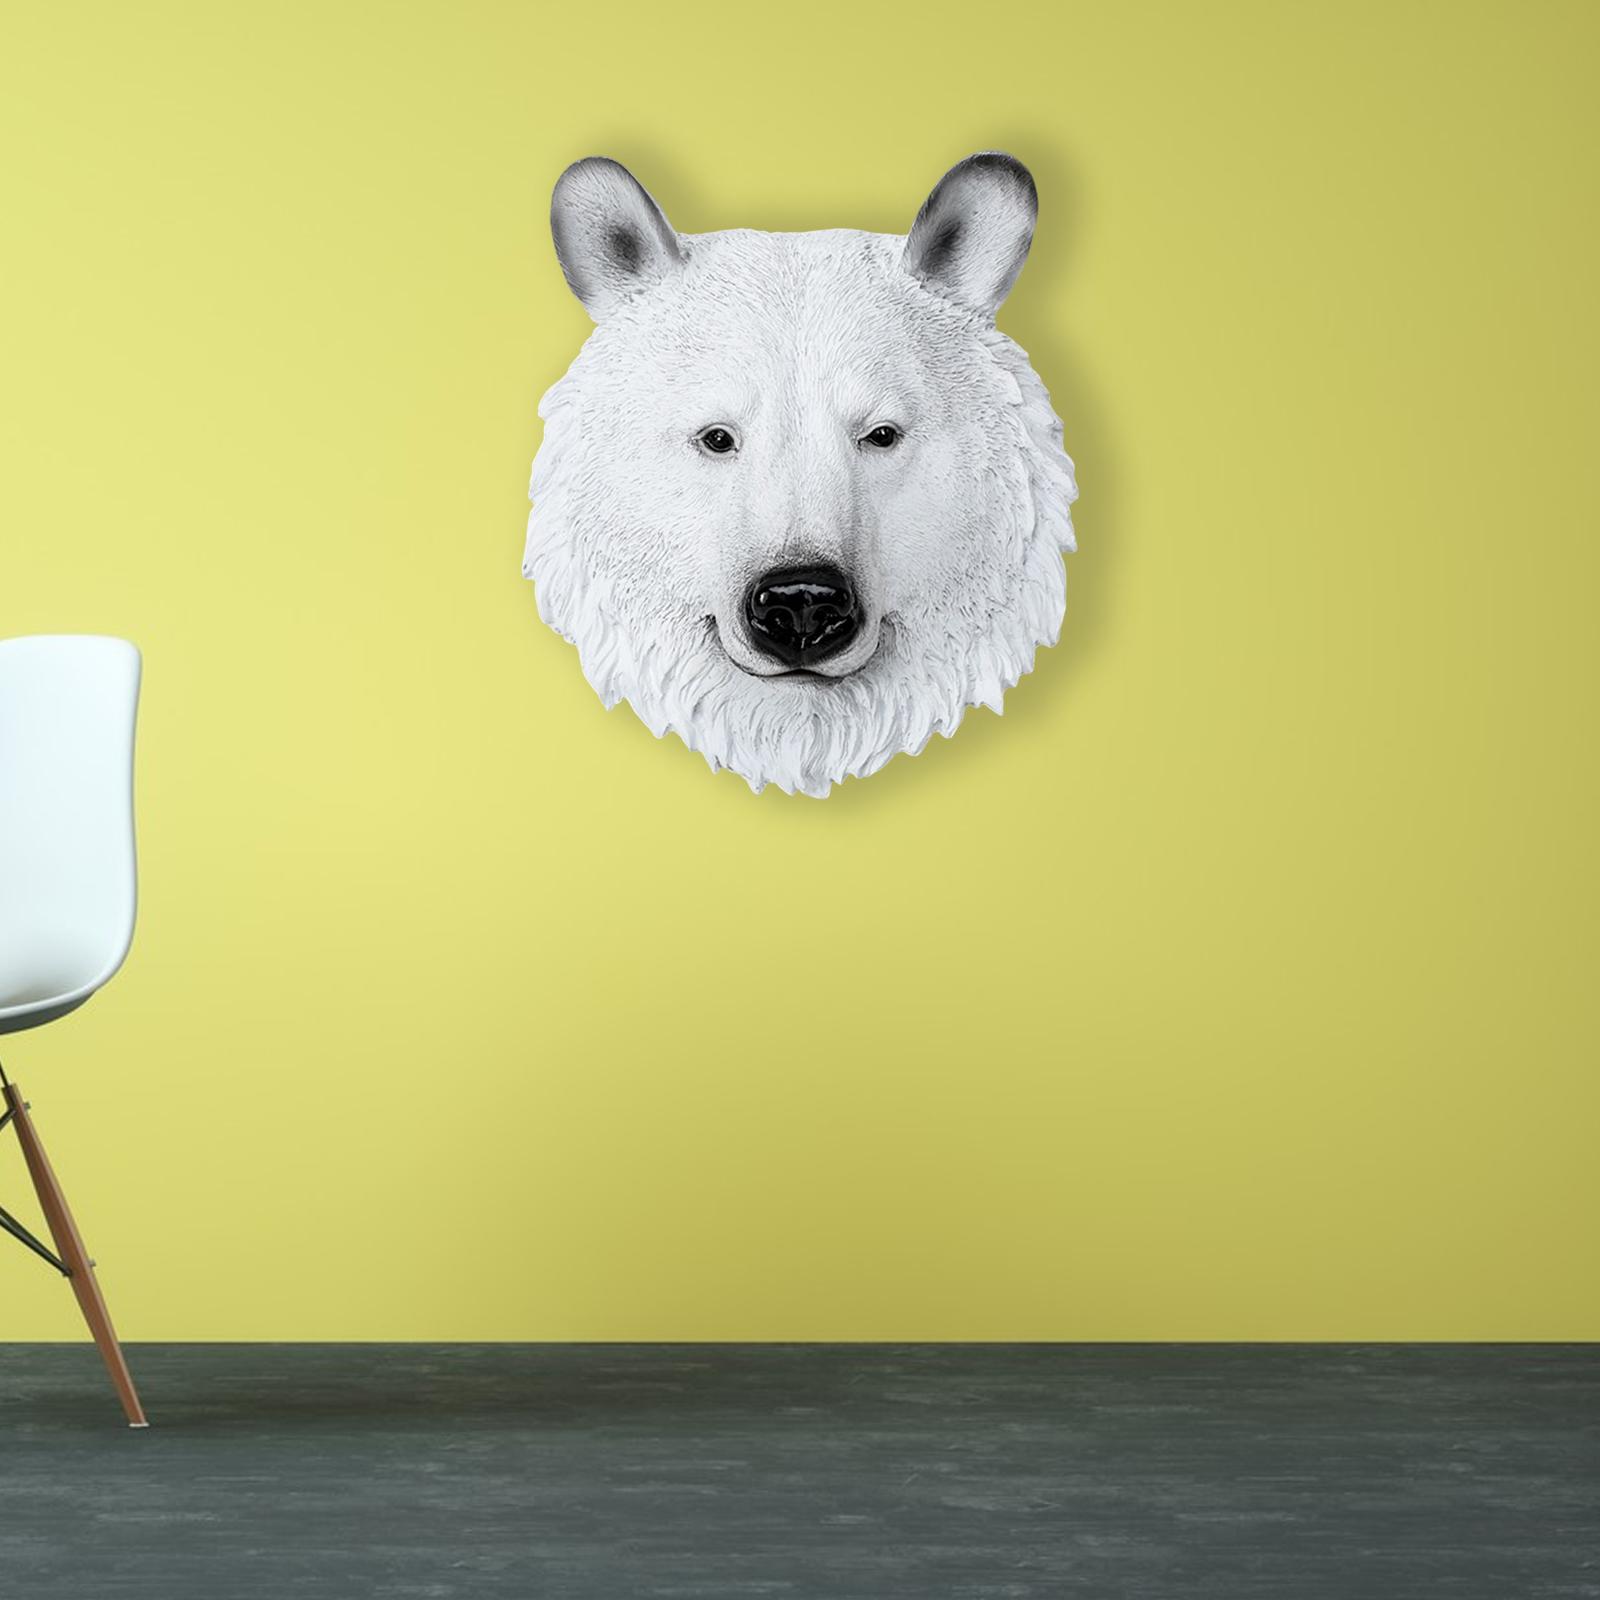 Simulation Polar Bear Wall Hanging Animal Wall Decor Figurines Ornament Room